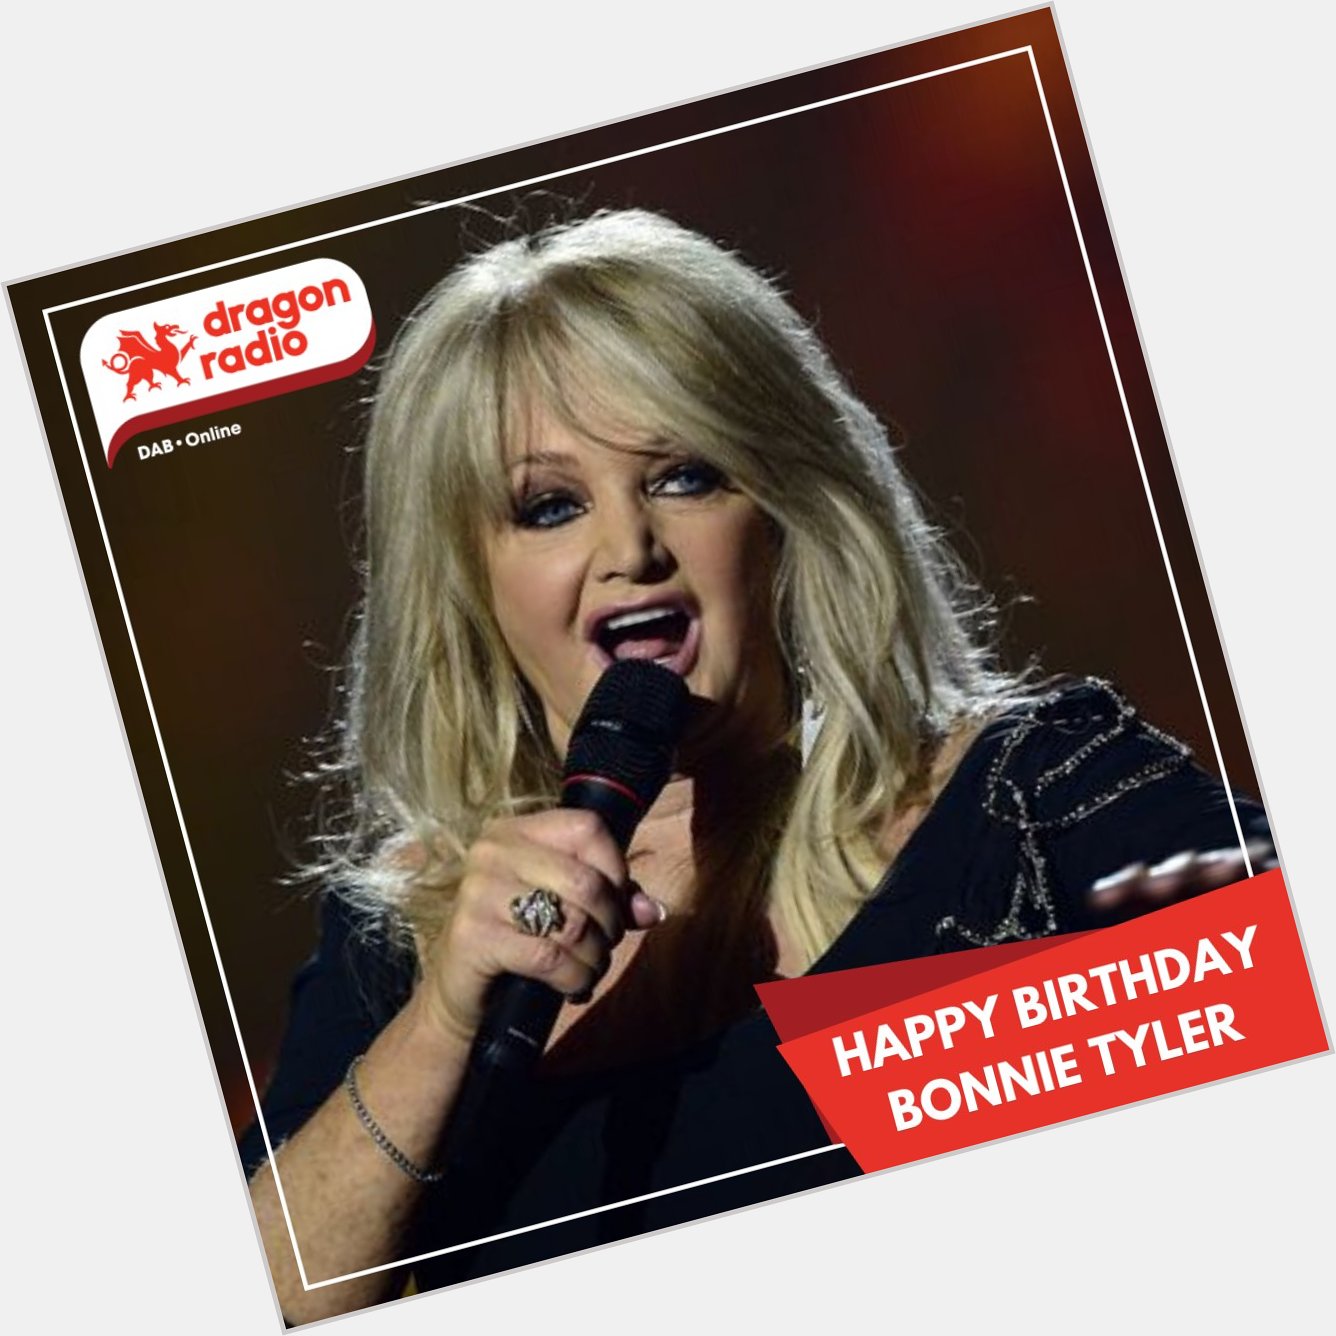 Happy 69th birthday to Bonnie Tyler! 